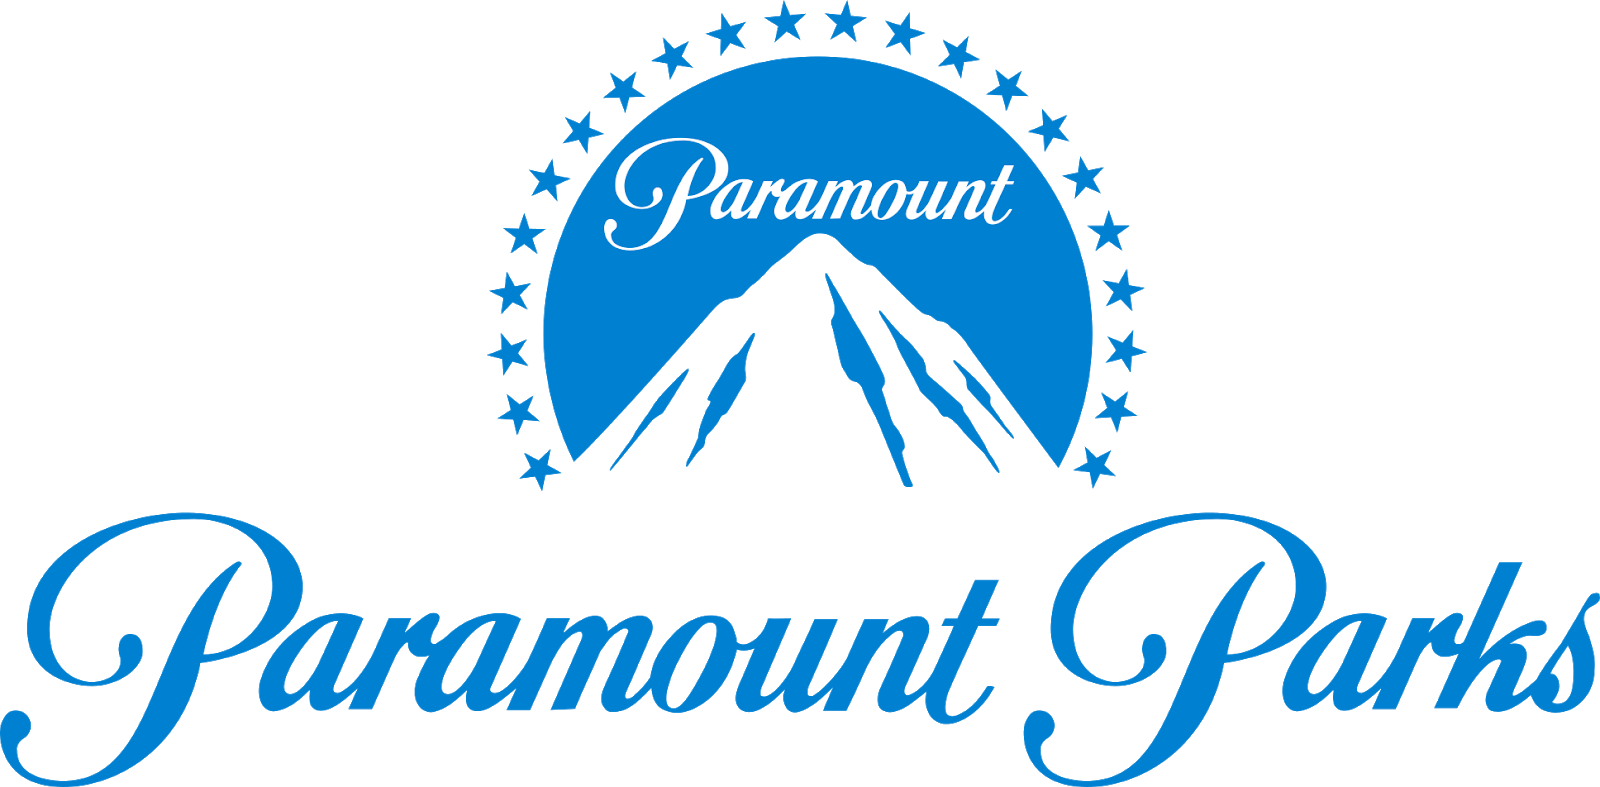 Paramount. Paramount picture парк развлечений. Тематический парк "Paramount pictures" Бали. Paramount группа.